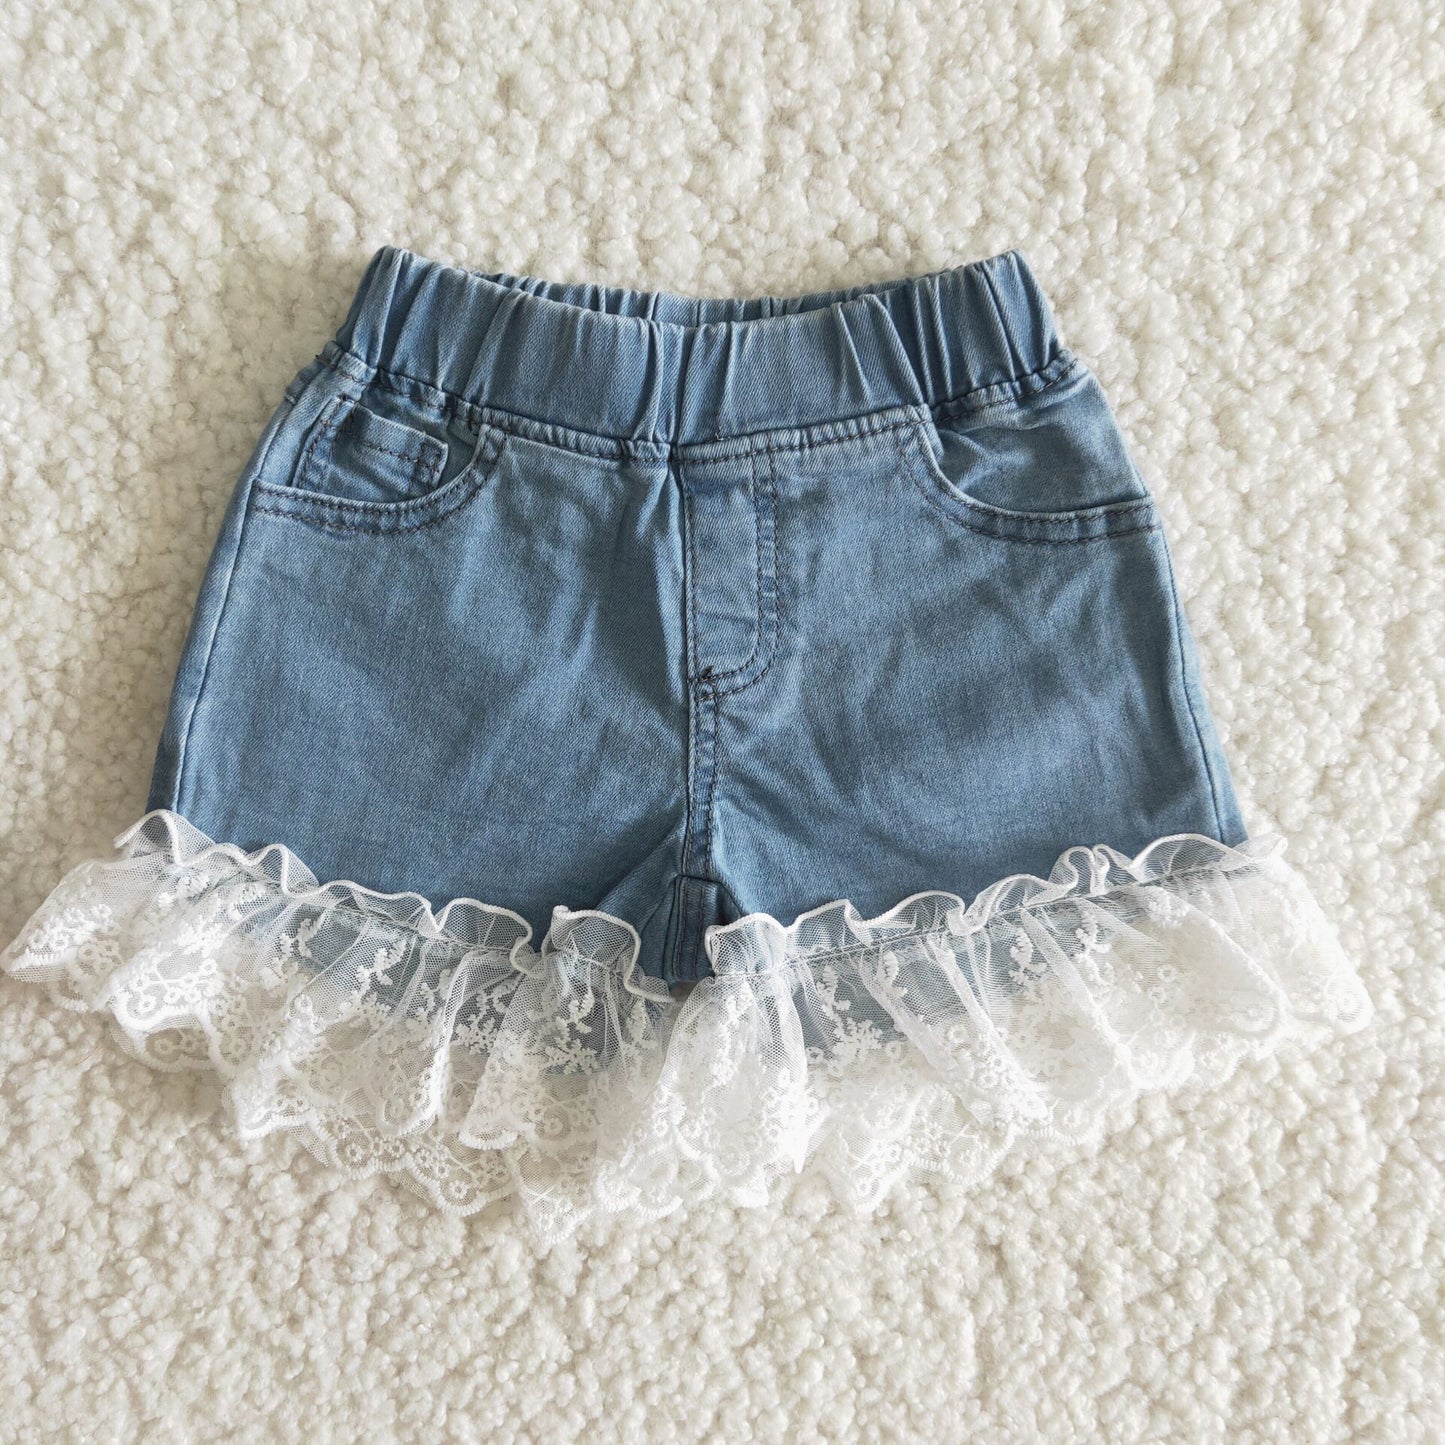 blue denim shorts with lace ruffle